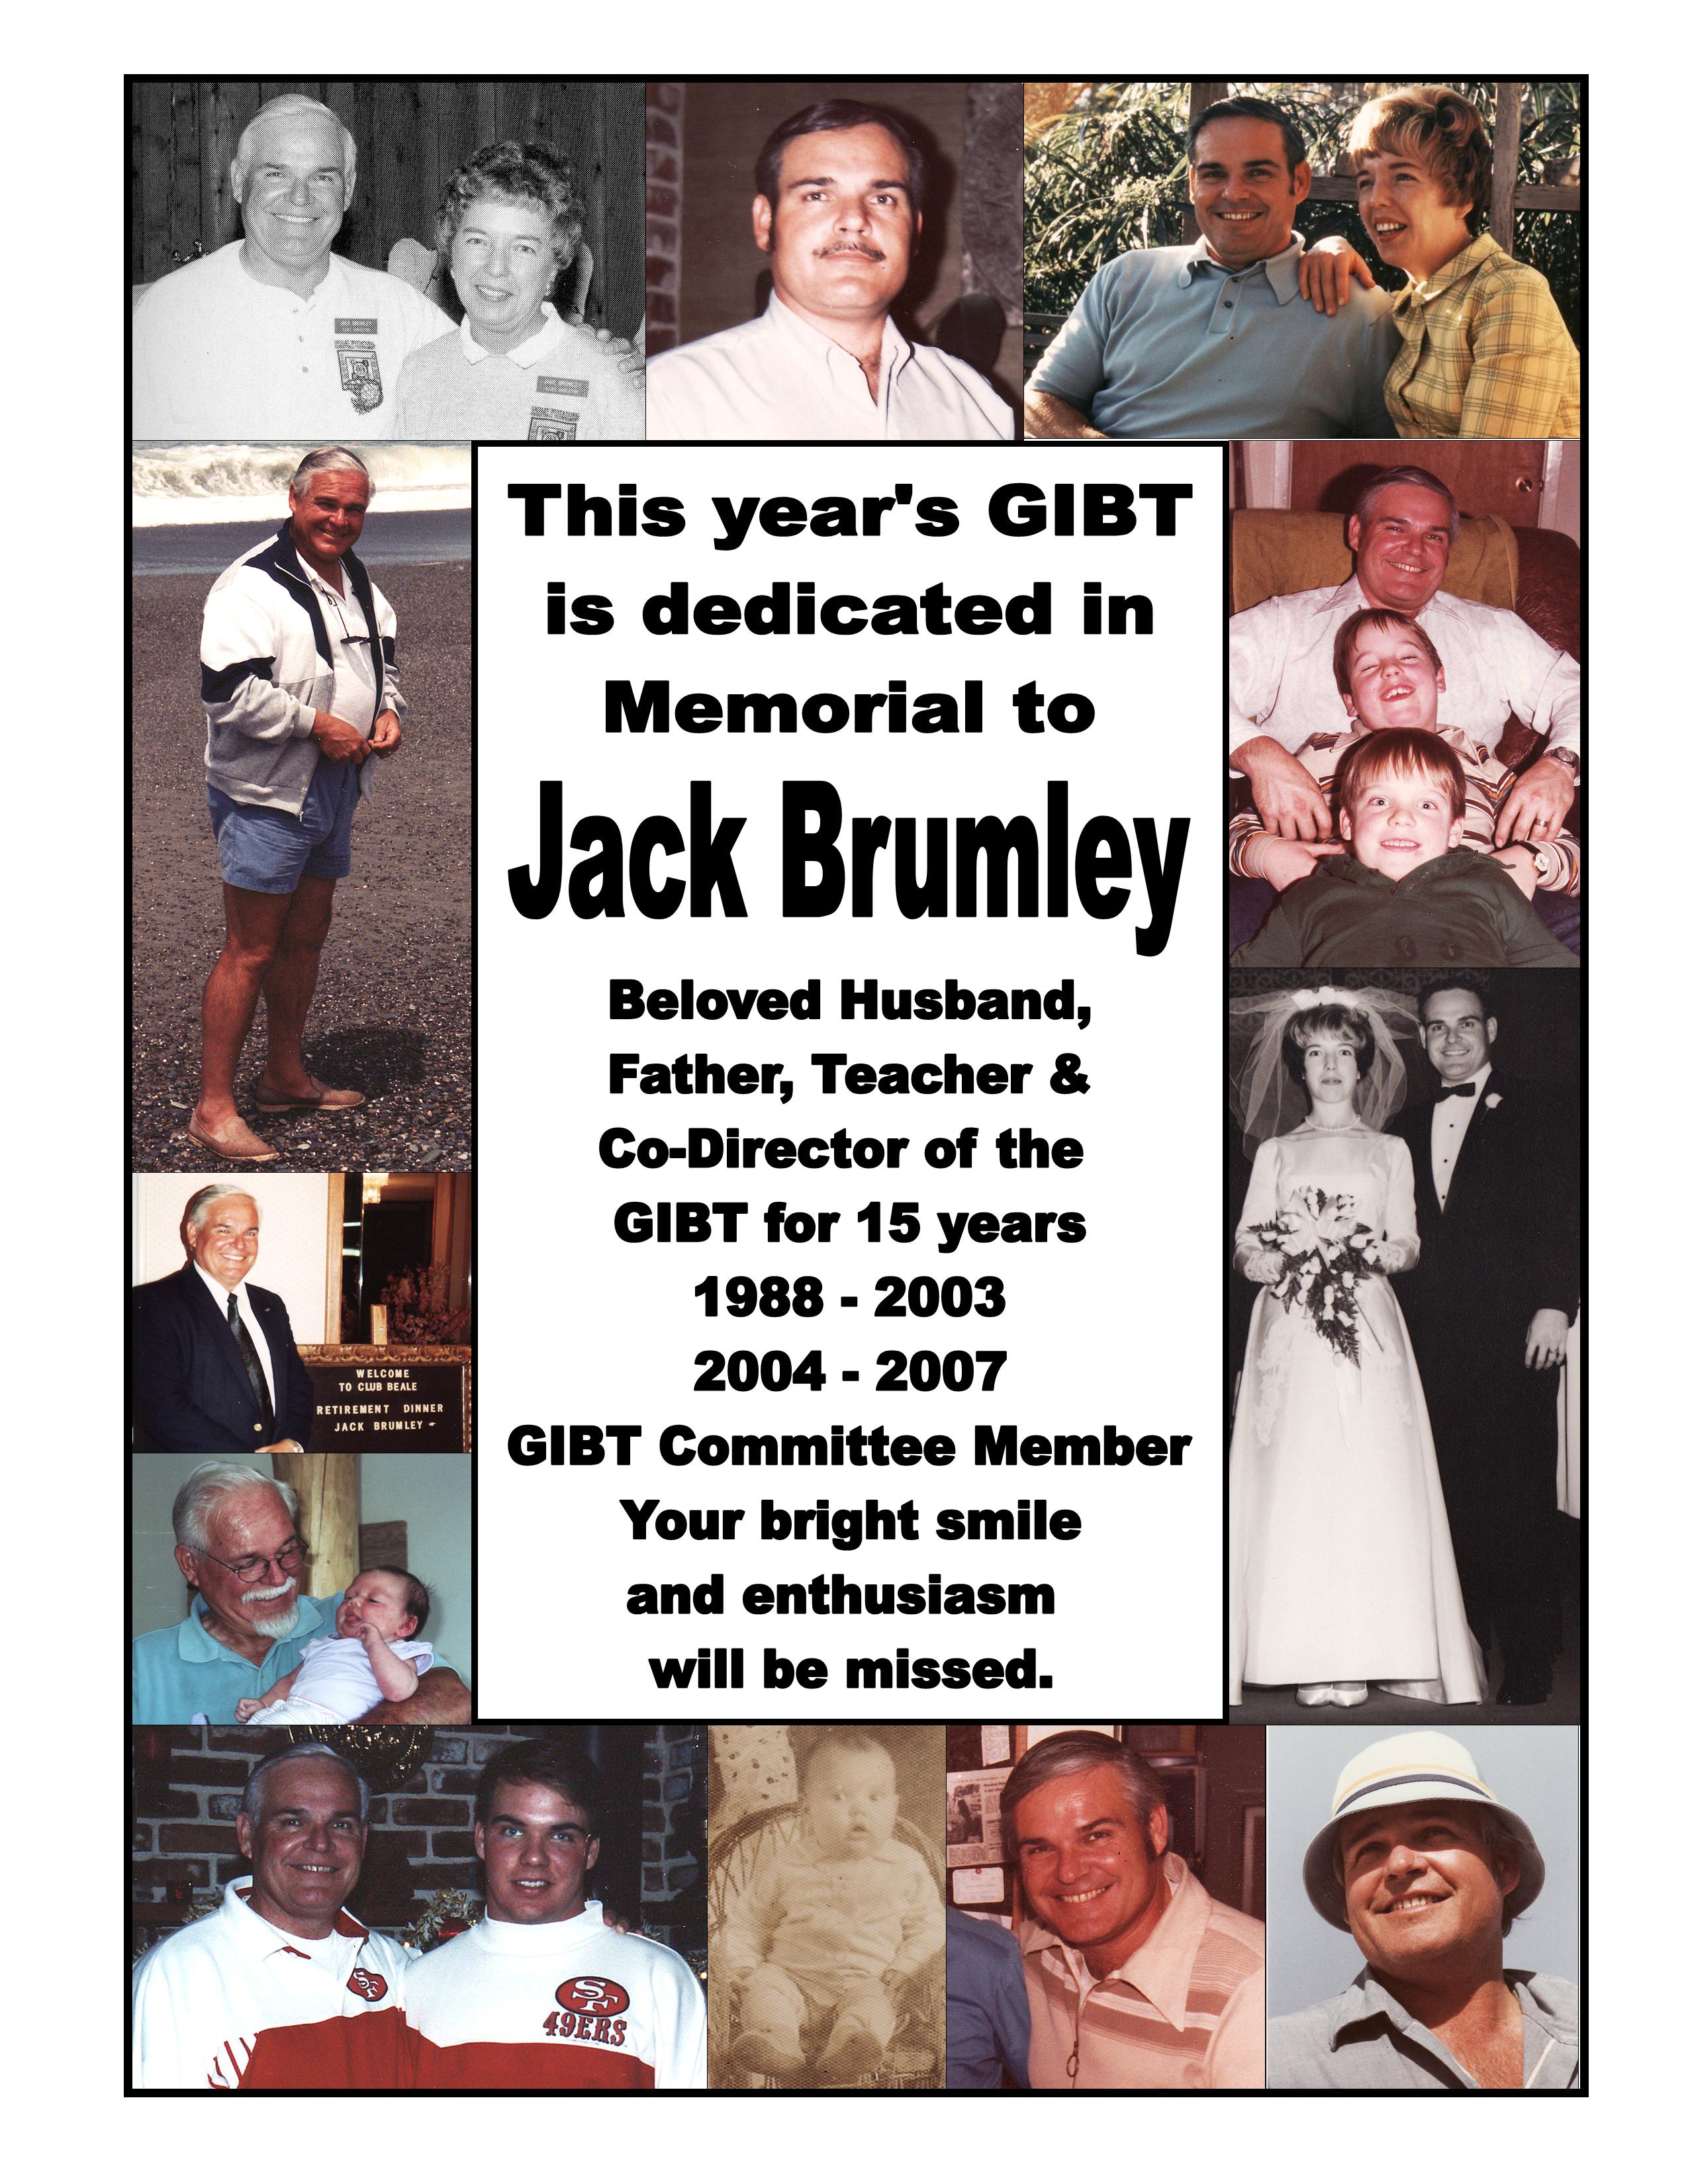 2007 Tournament dedication to Jack Brumley